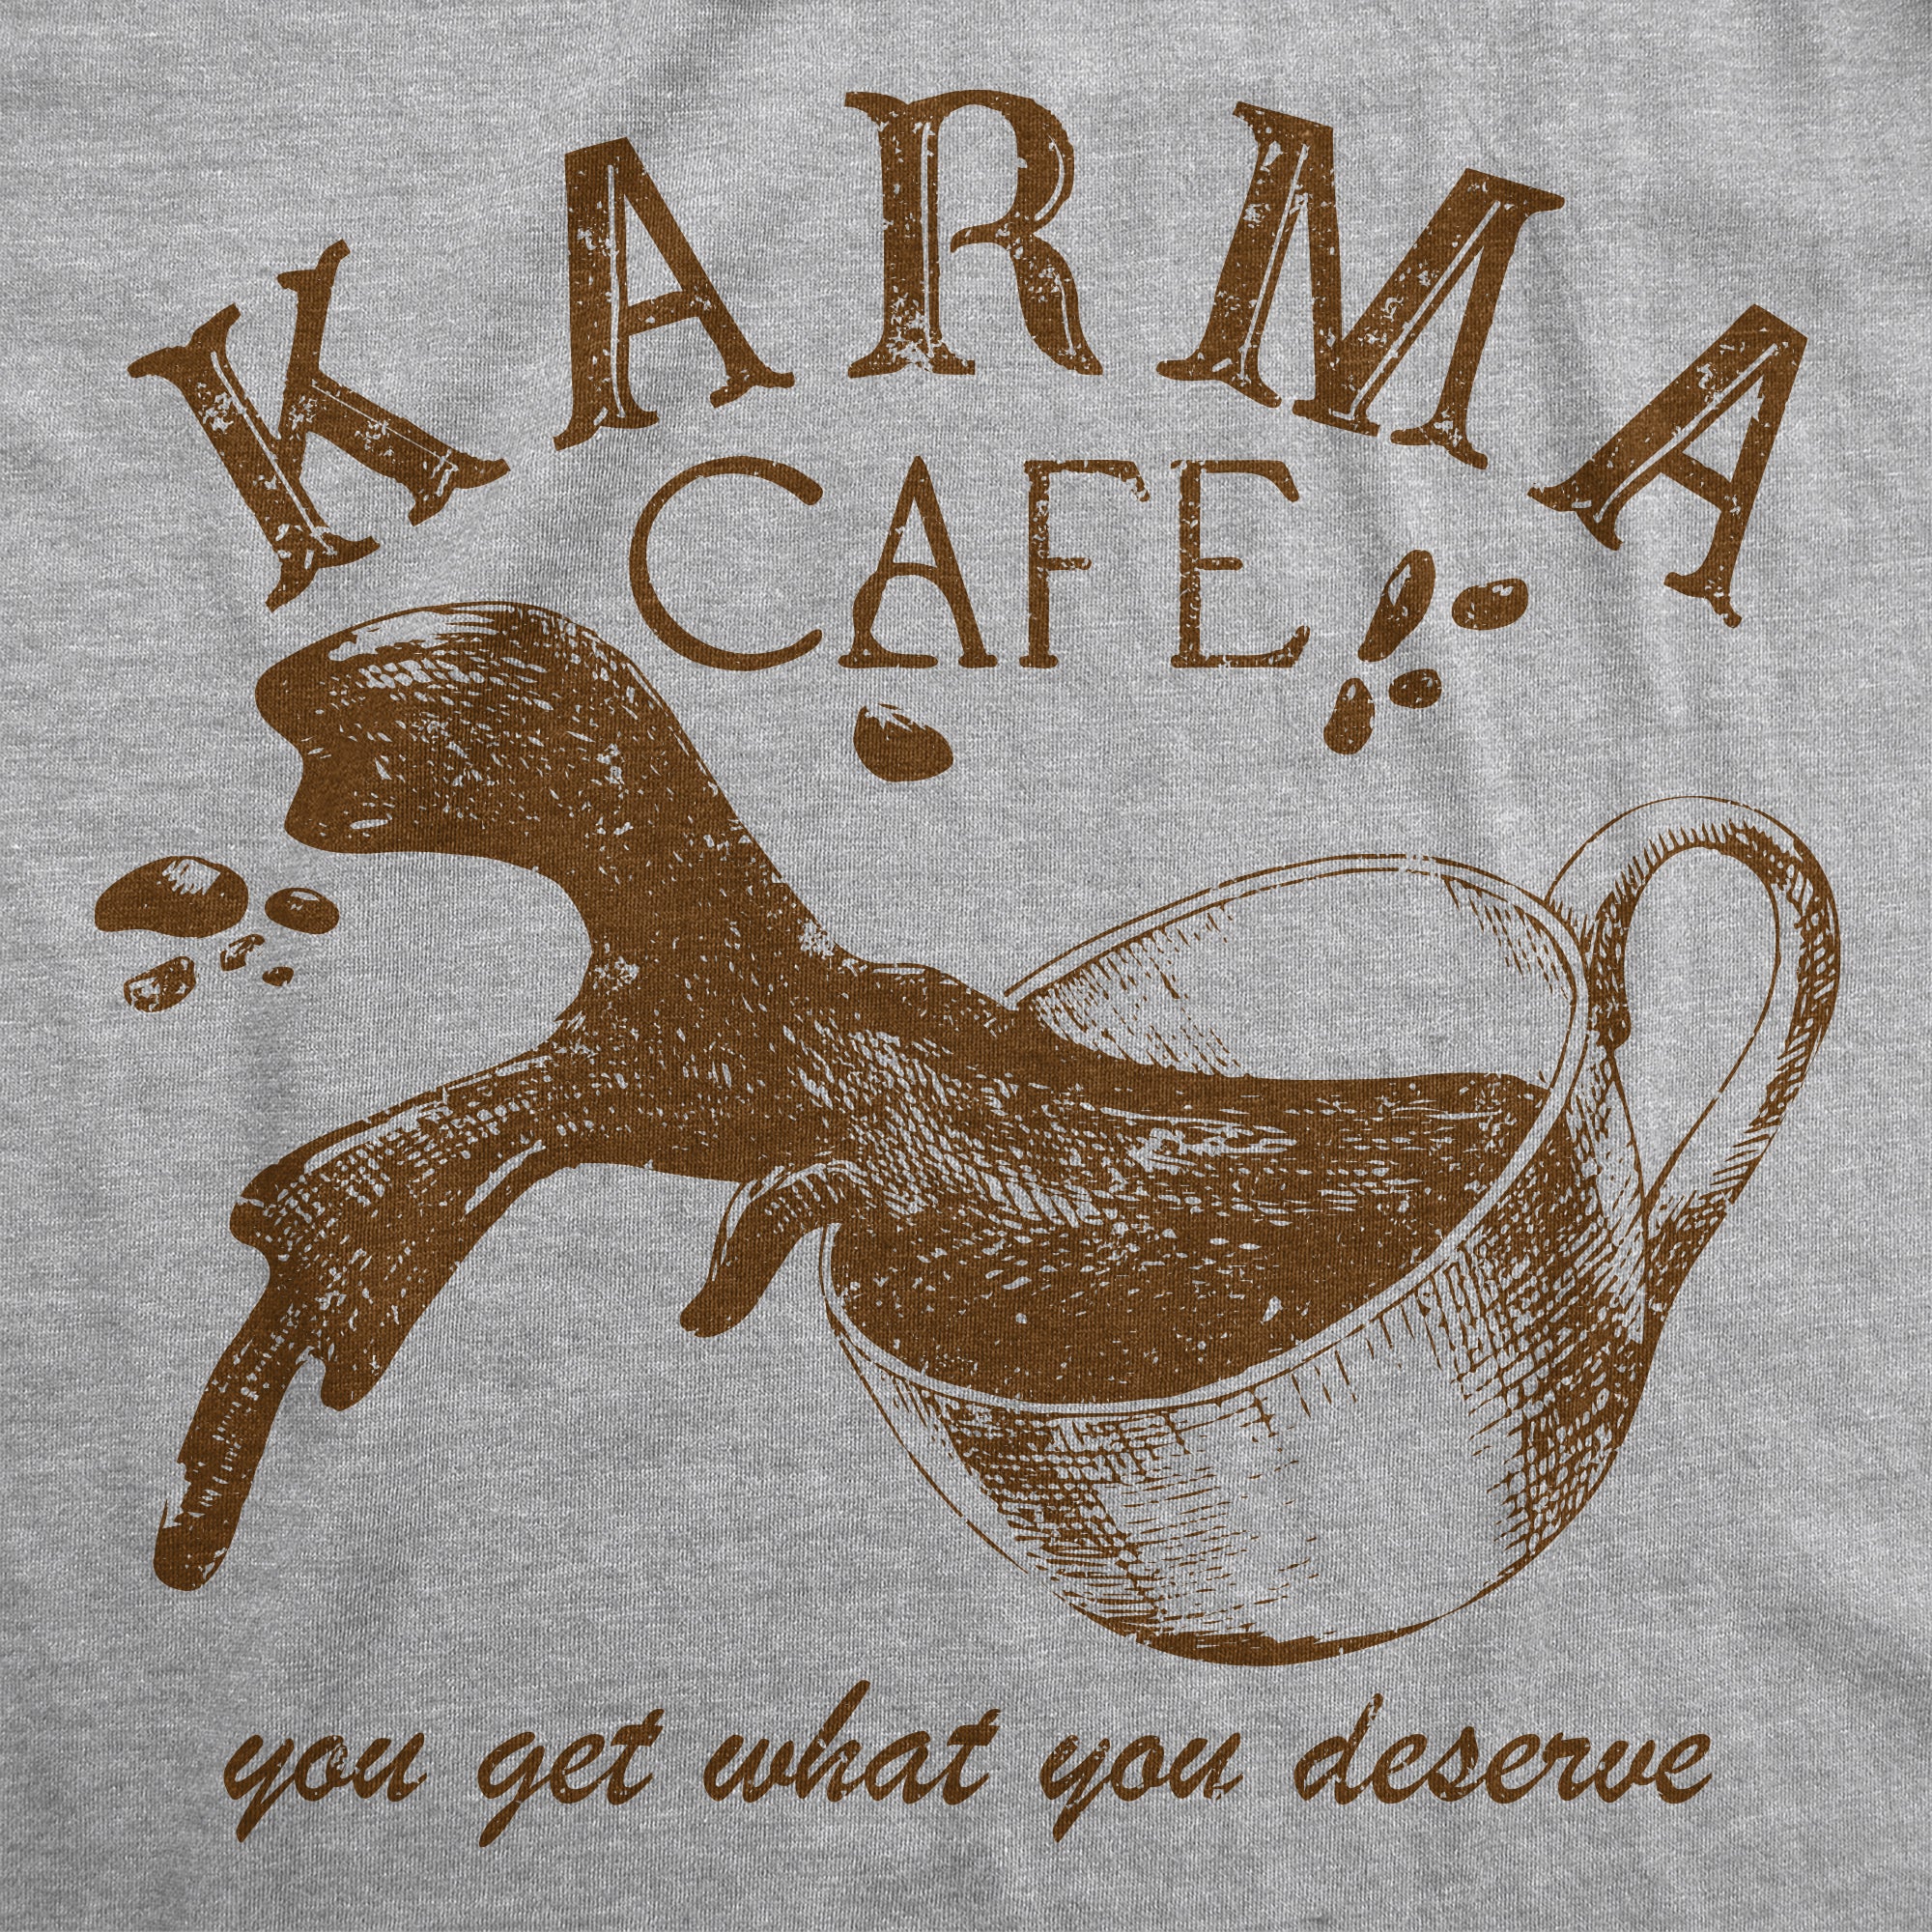 Funny Light Heather Grey - Karma Cafe Karma Cafe Womens T Shirt Nerdy Coffee sarcastic Tee